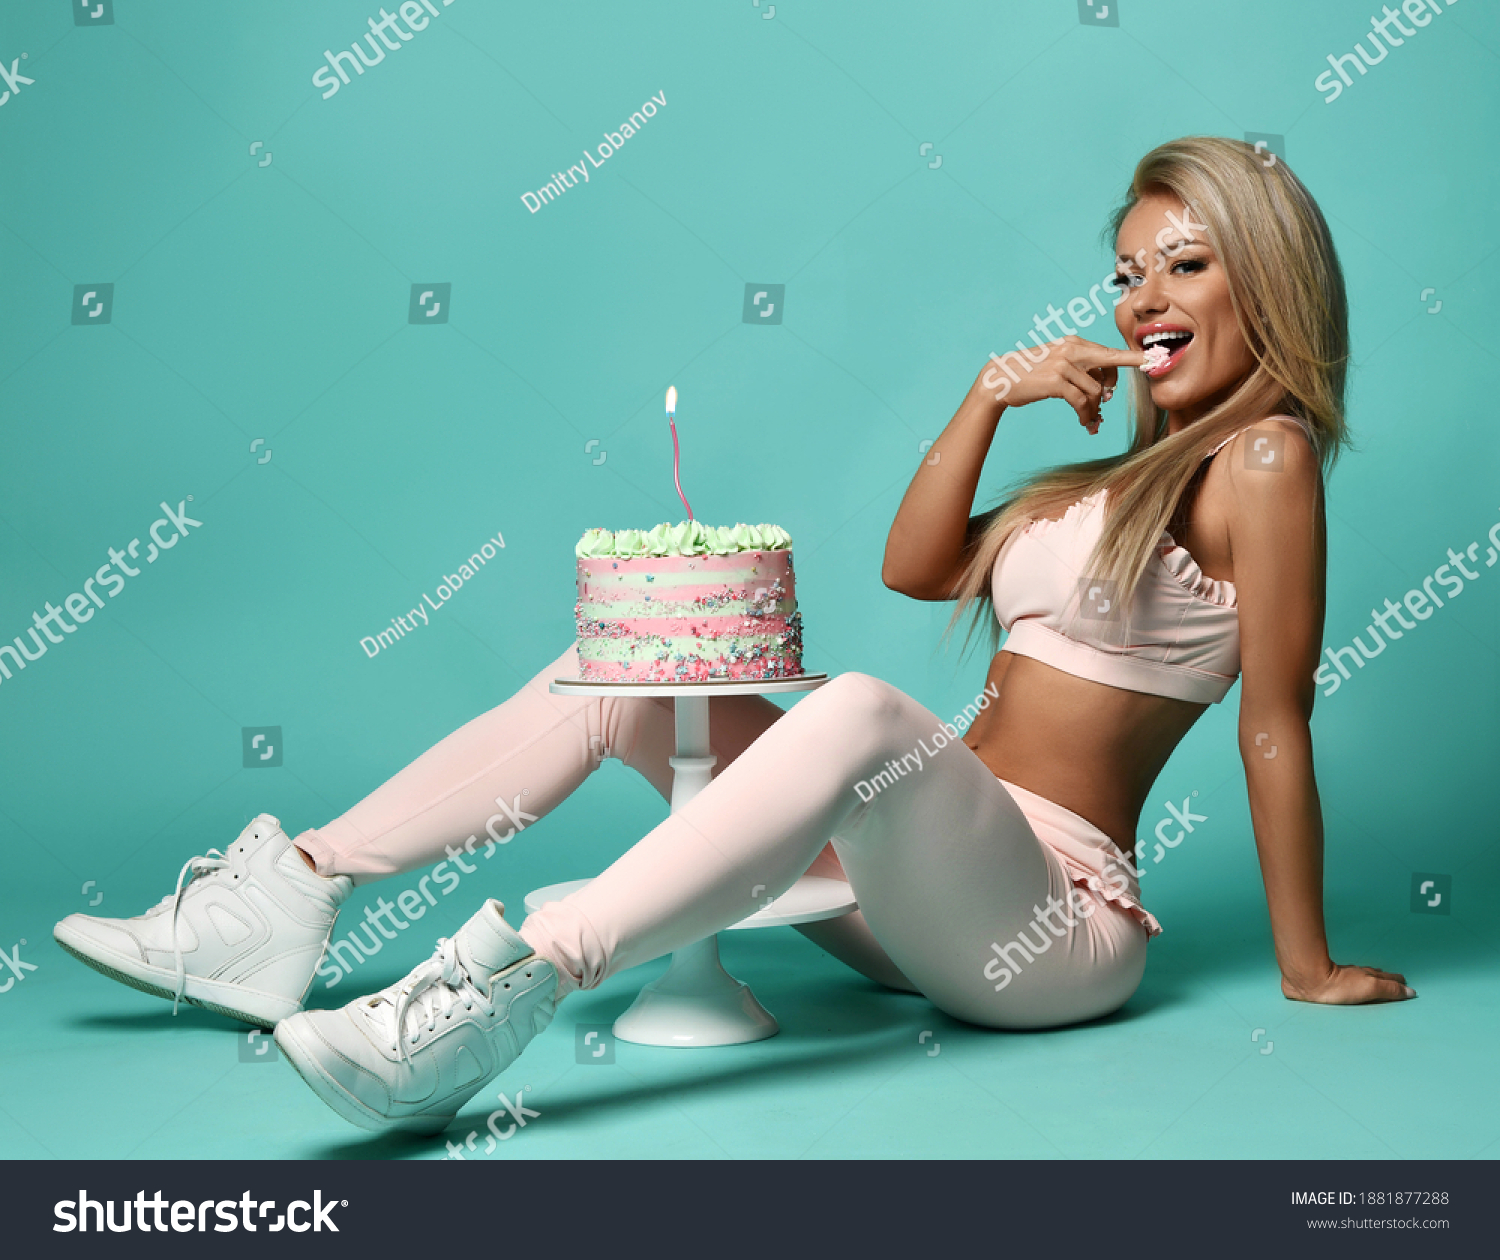 ada sheng add photo sexy woman happy birthday